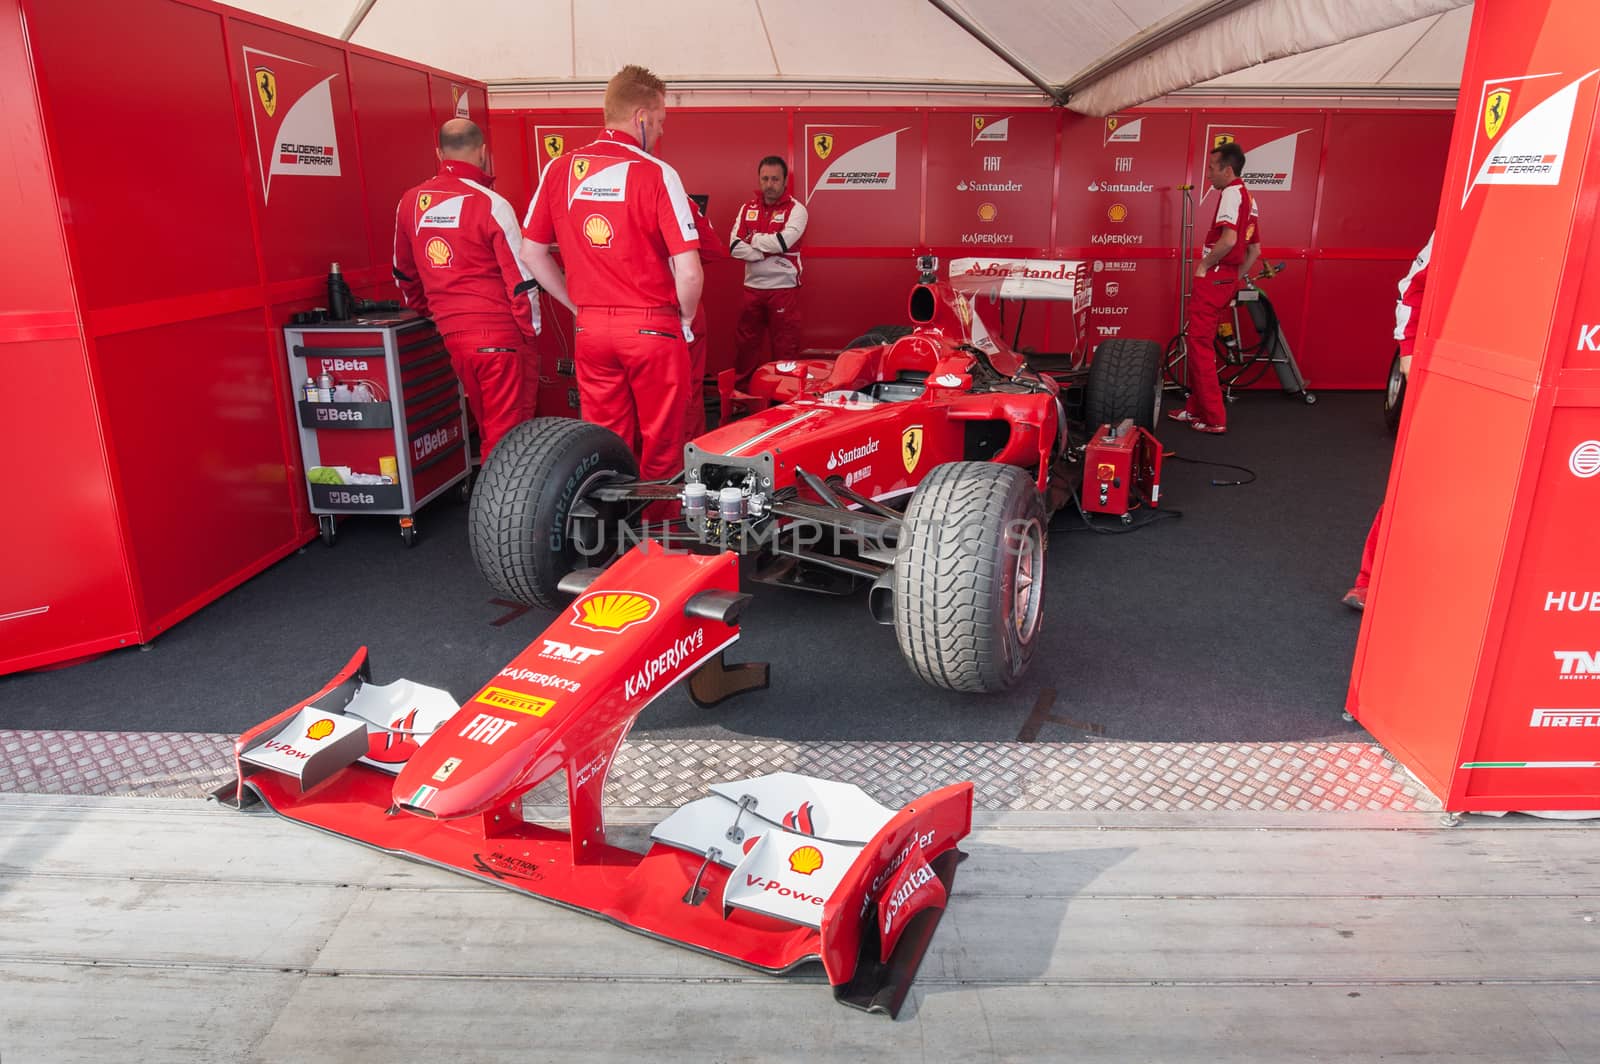 Goodwood, UK - July 13, 2013: Ferrari Formula 1 race car and mechanics at the Festival of Speed event in Goodwood, UK